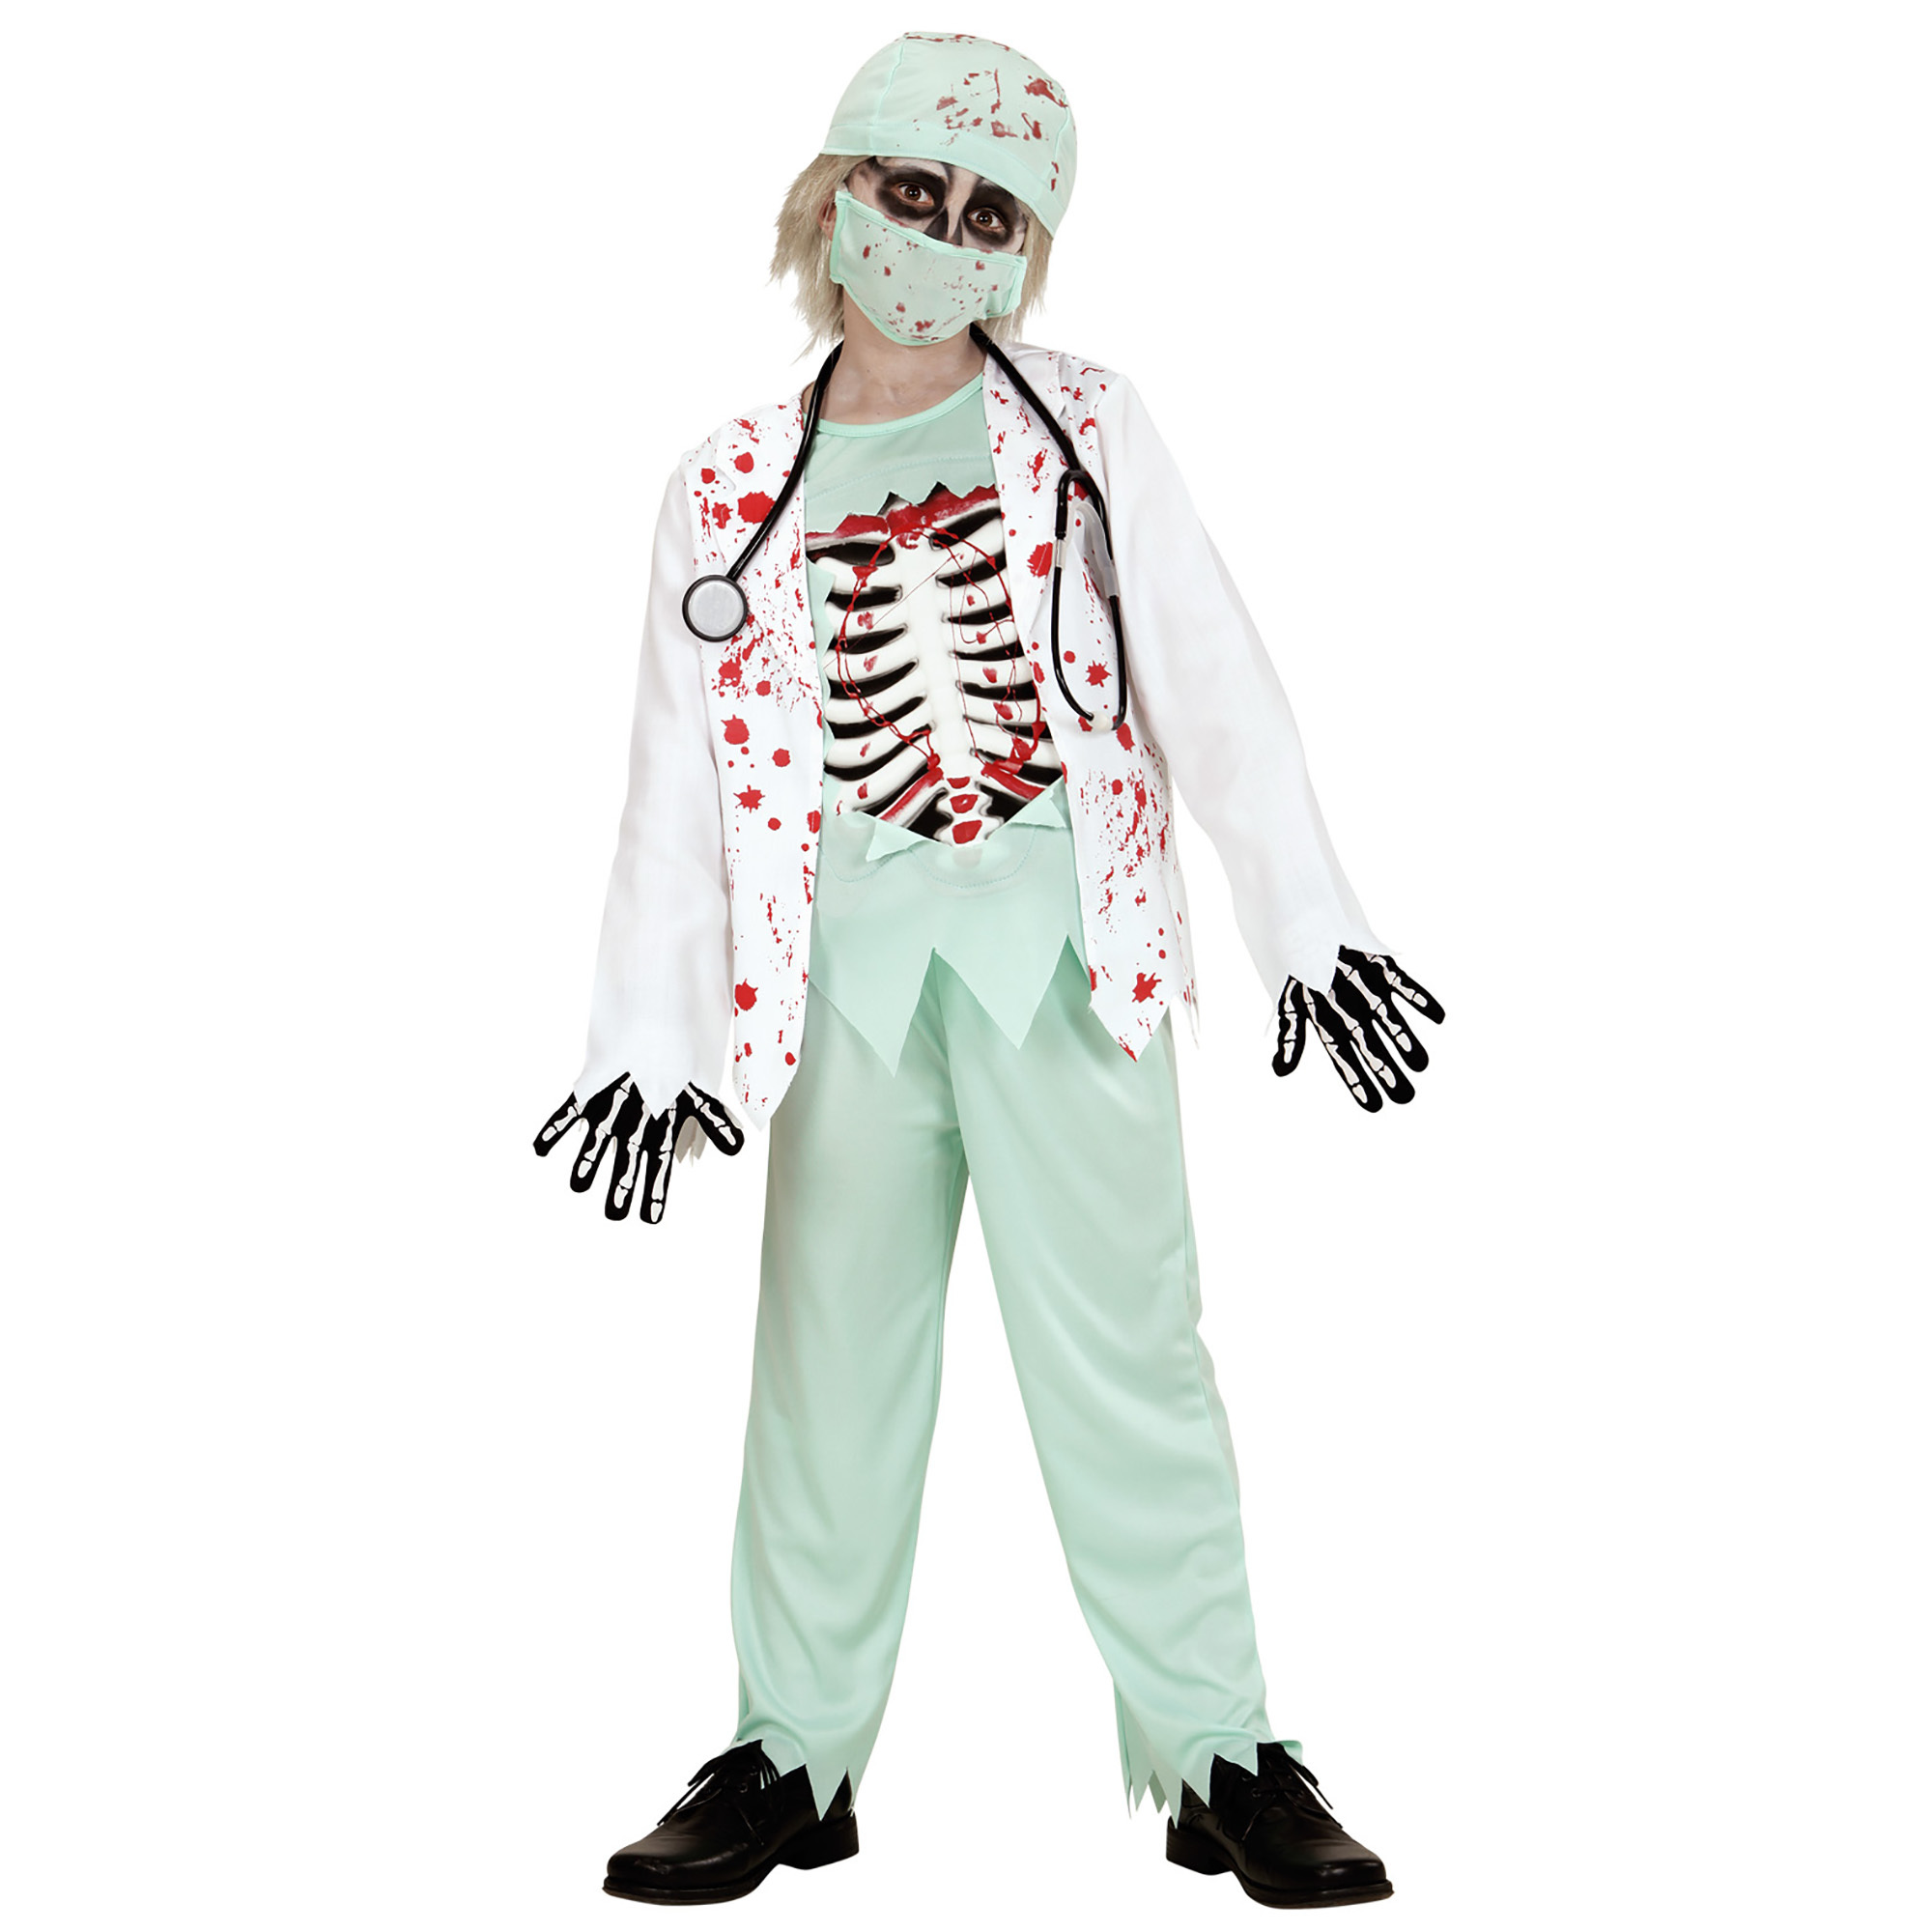 Scary zombie dokter kostuum kind